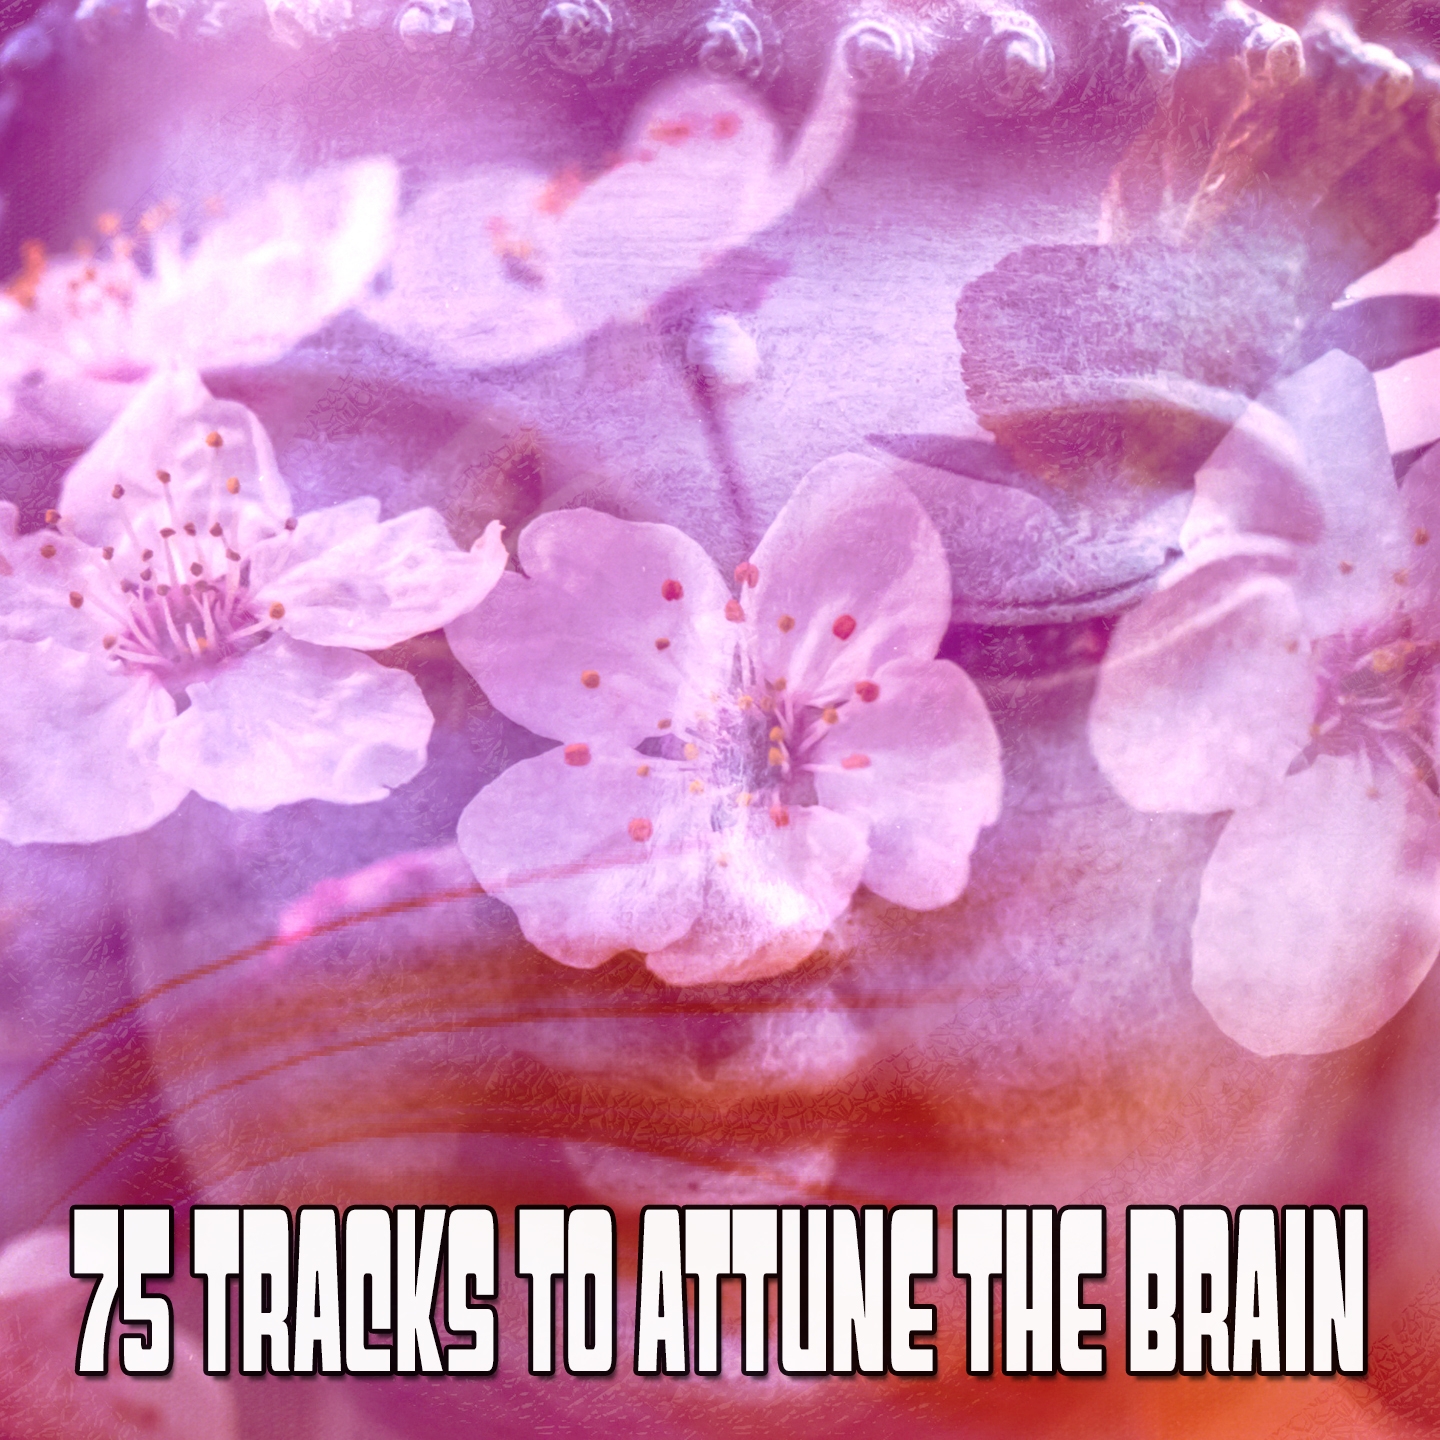 75 Tracks To Attune The Brain